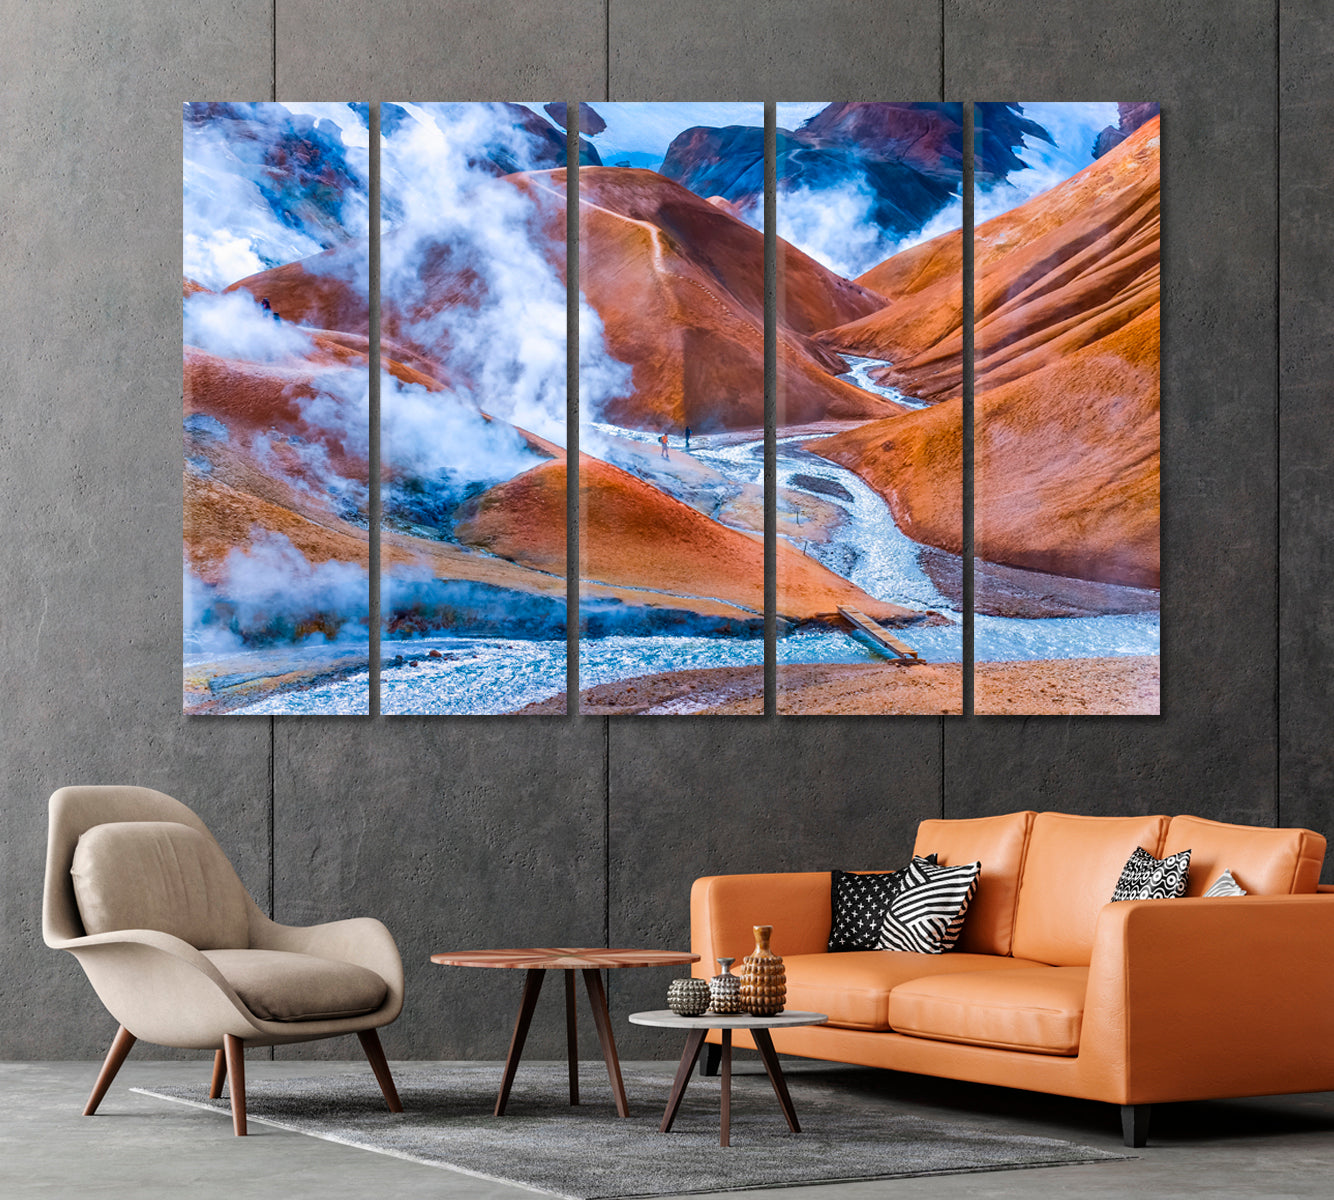 Geothermal Valley in Kerlingarfjoll Iceland Canvas Print-Canvas Print-CetArt-1 Panel-24x16 inches-CetArt